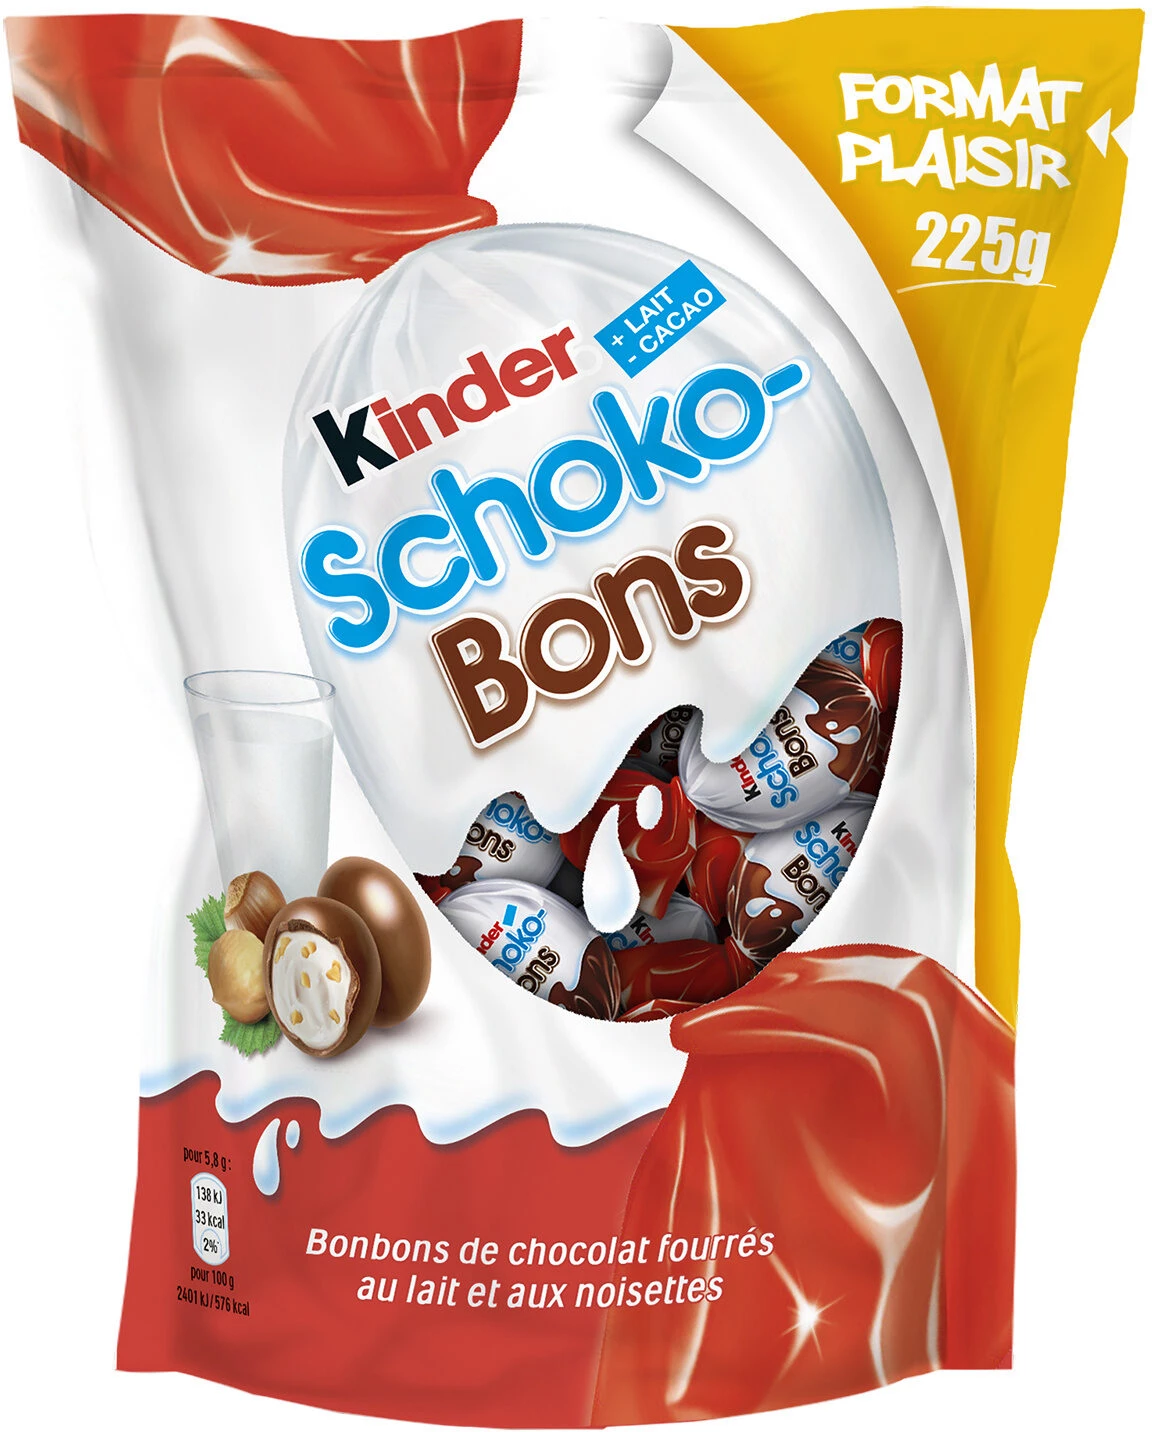 Bons de chocolate 225g - KINDER